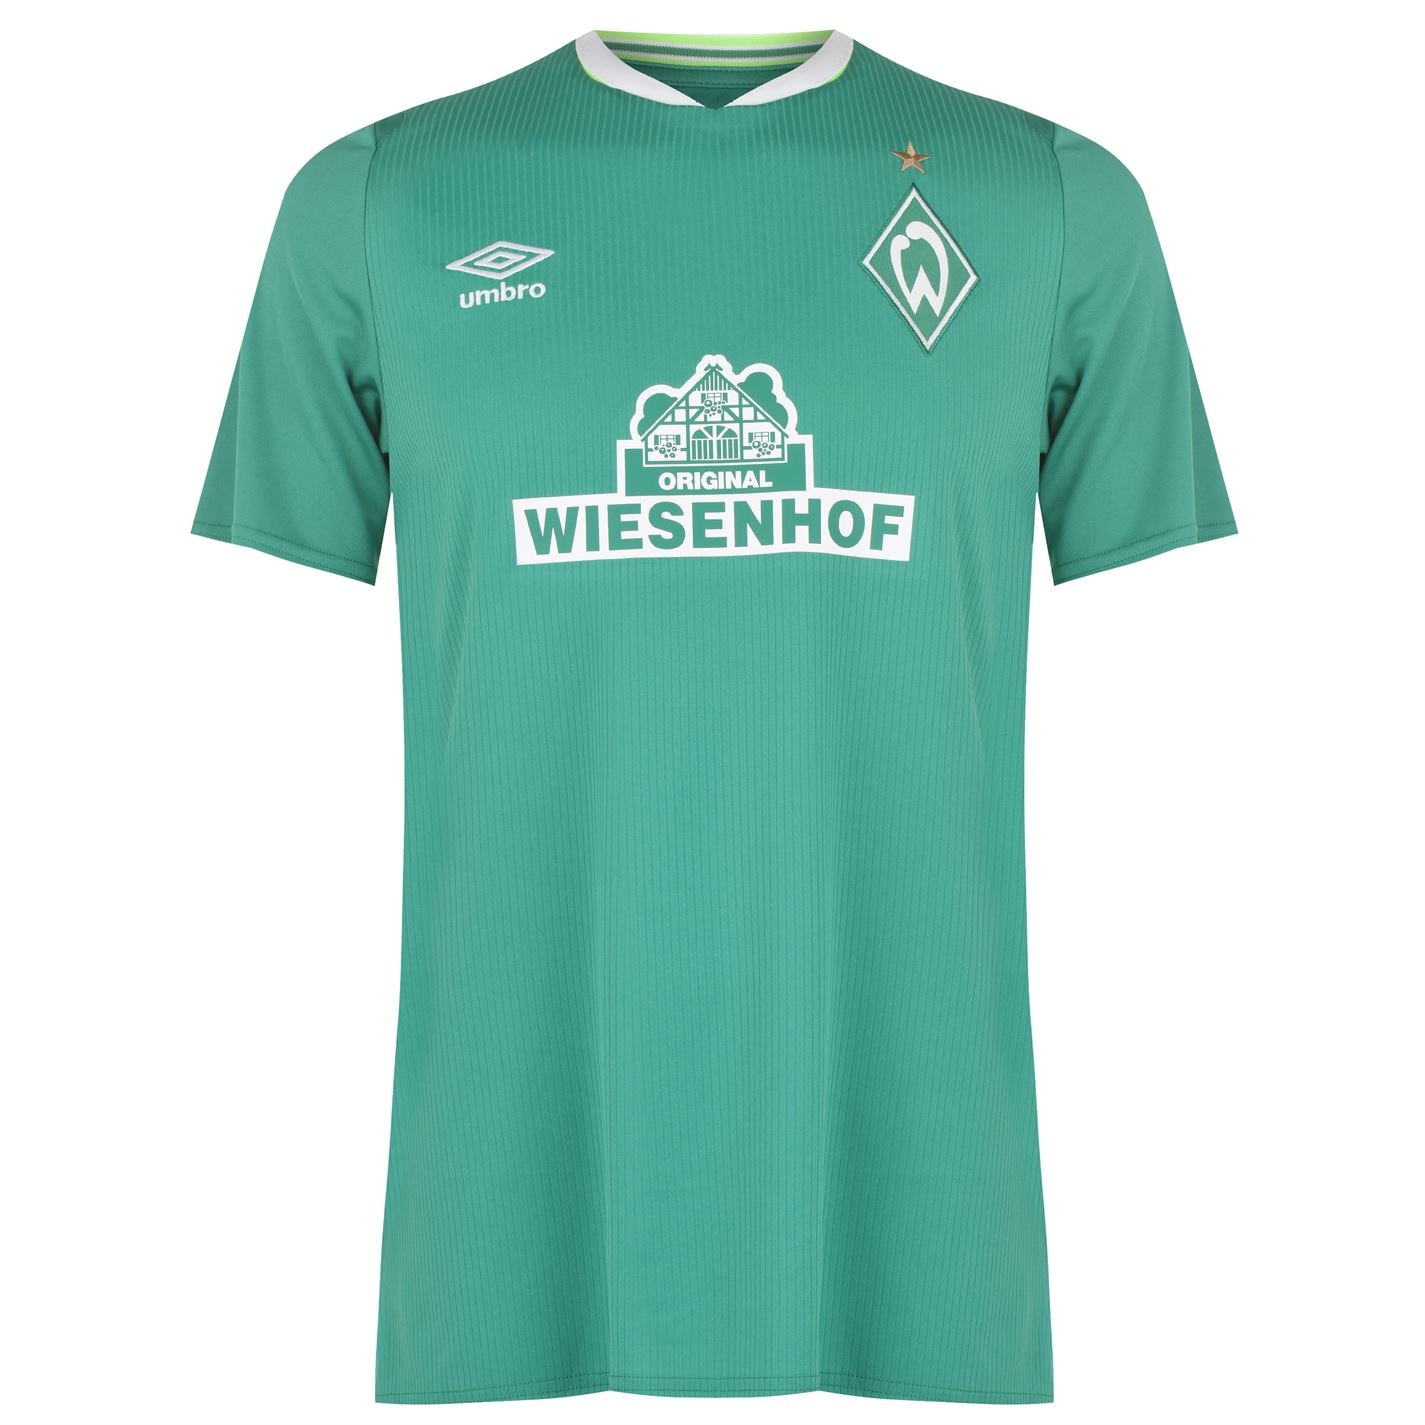 Camasa Umbro Werder Bremen Home 2019 2020